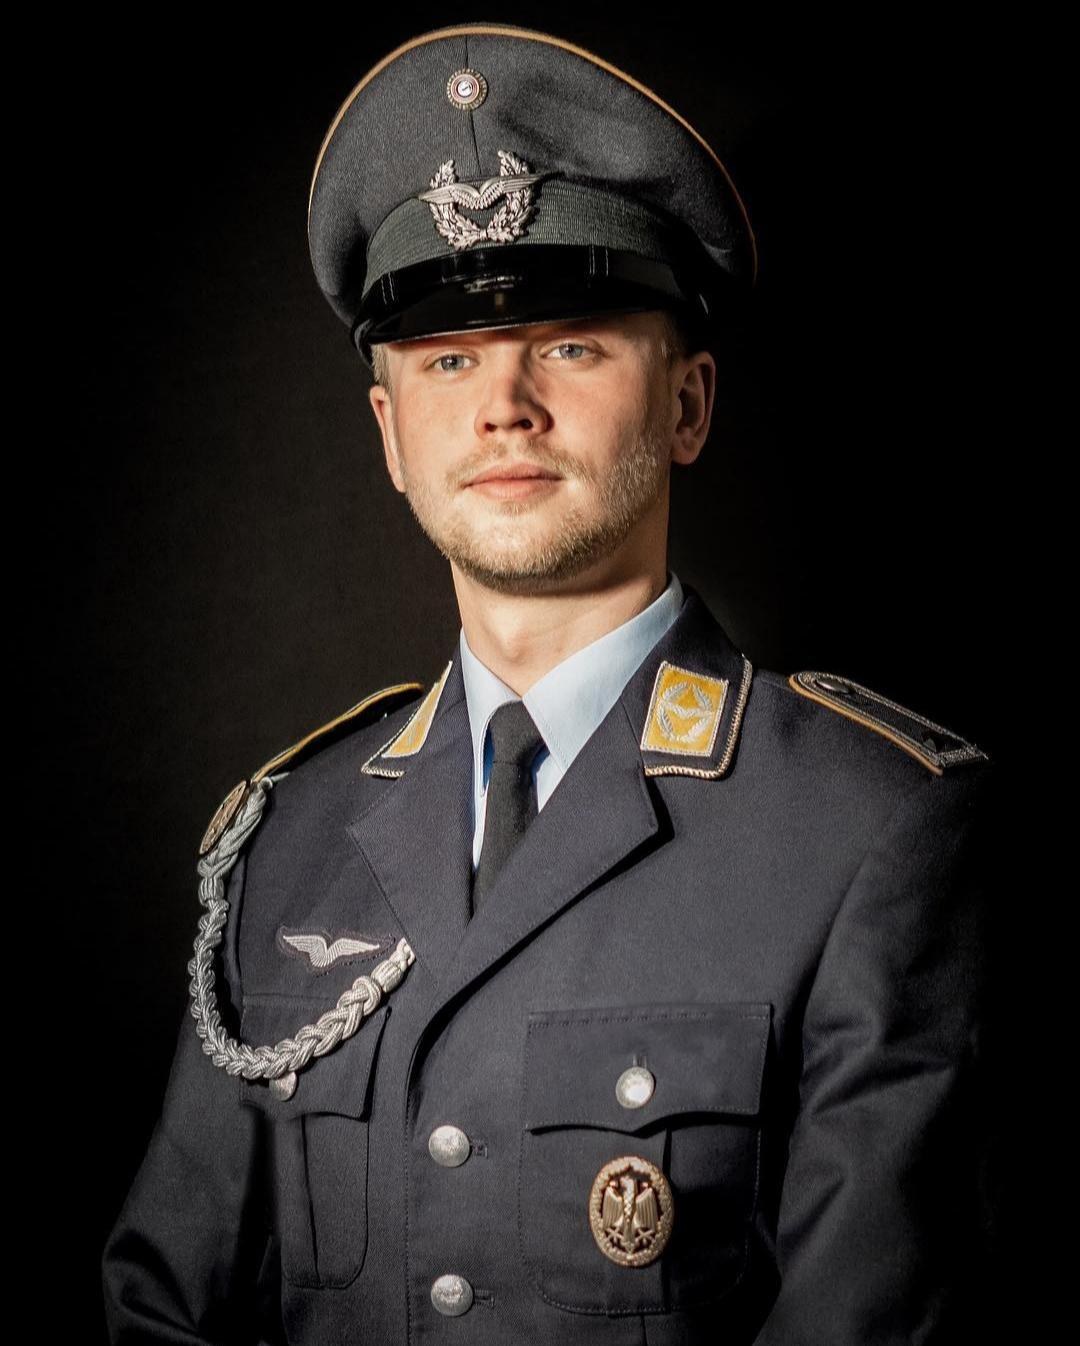 Der bundeswehr. Офицер Бундесвера. Люфтваффе Бундесвер униформа. Офицер Бундесвера Германии. Бундесвер форма офицера 2020.